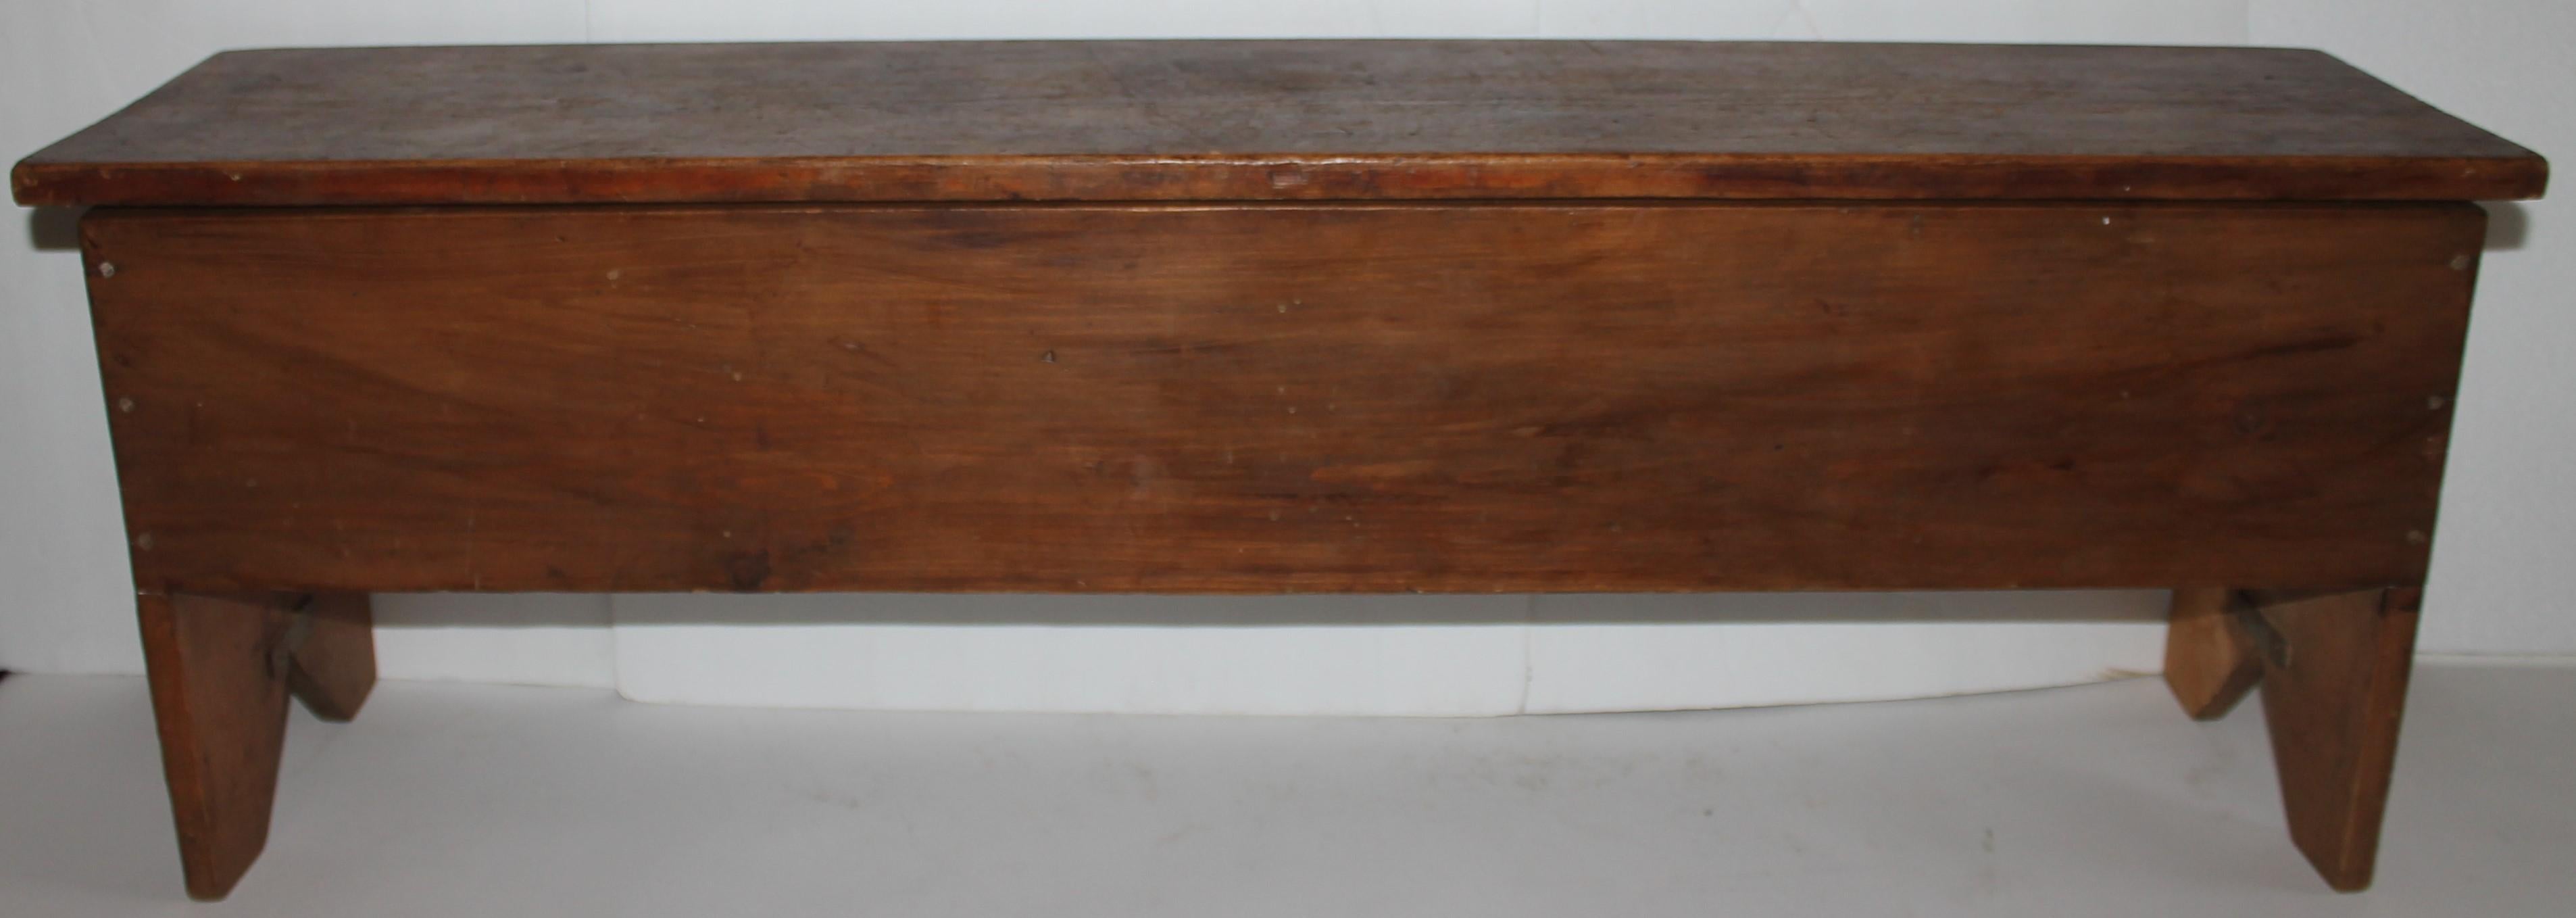 Bench & Bin Box aus Holz, 19. Jahrhundert (Adirondack) im Angebot